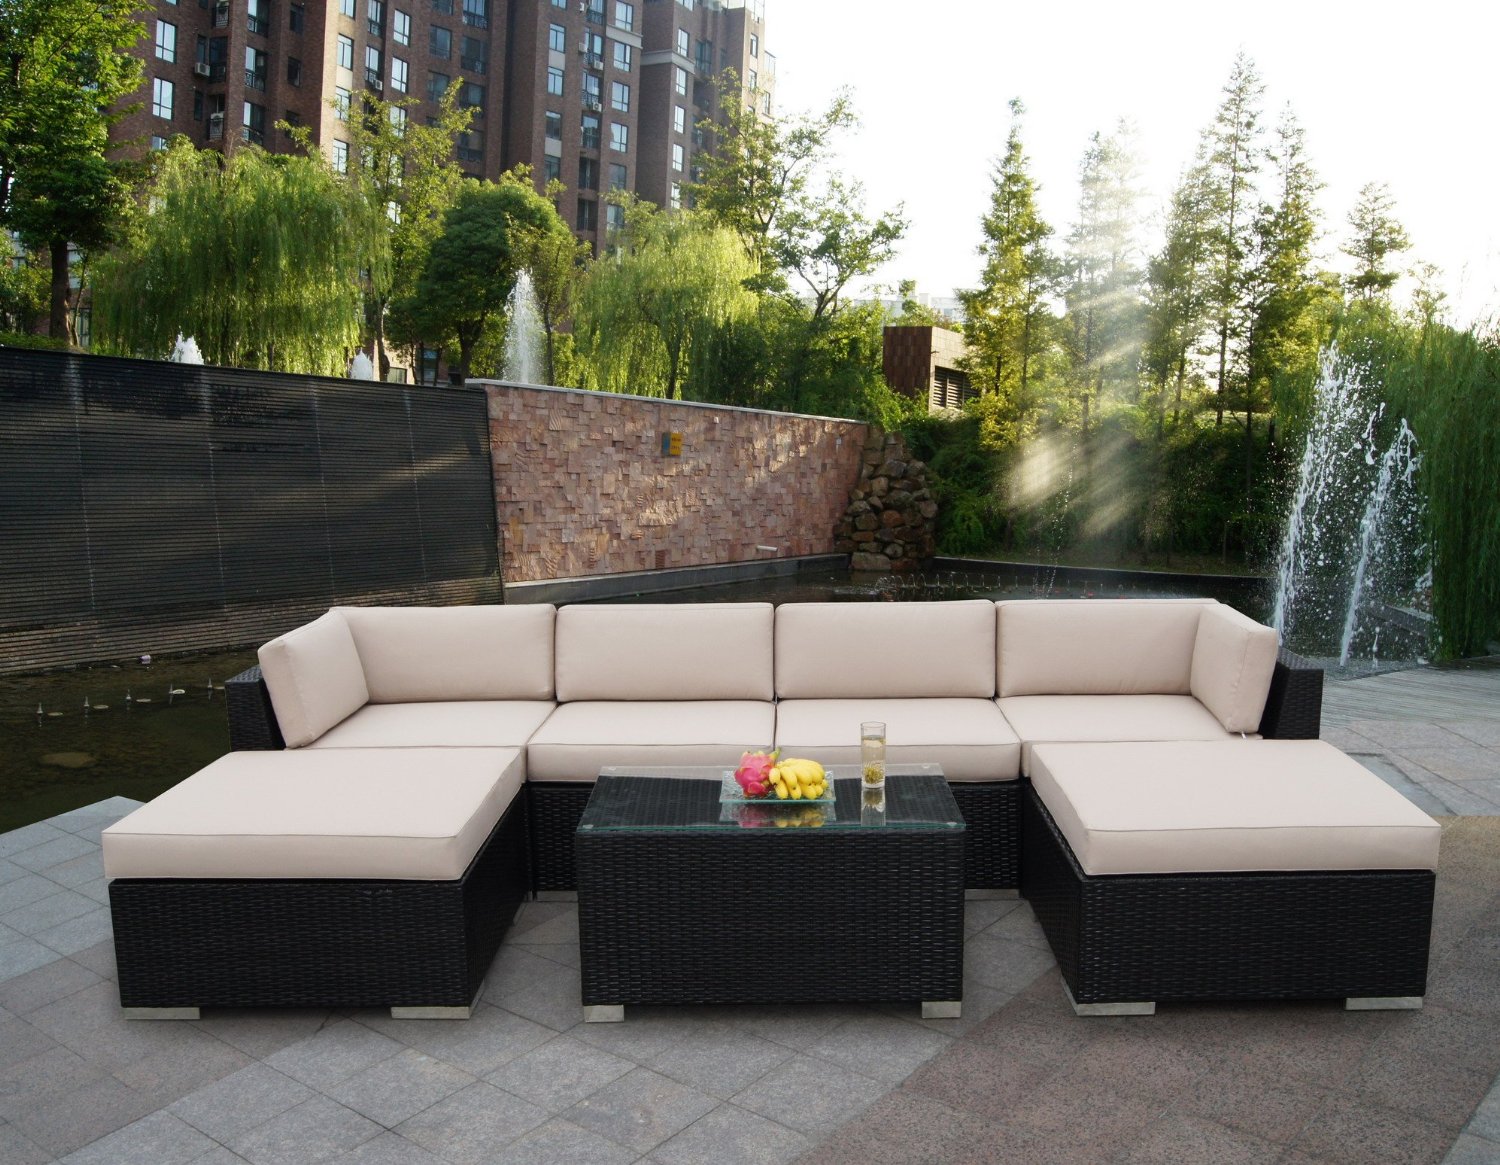 outdoor patio furniture sets explore patio furniture sets, wicker furniture, and more! BPIXOZF